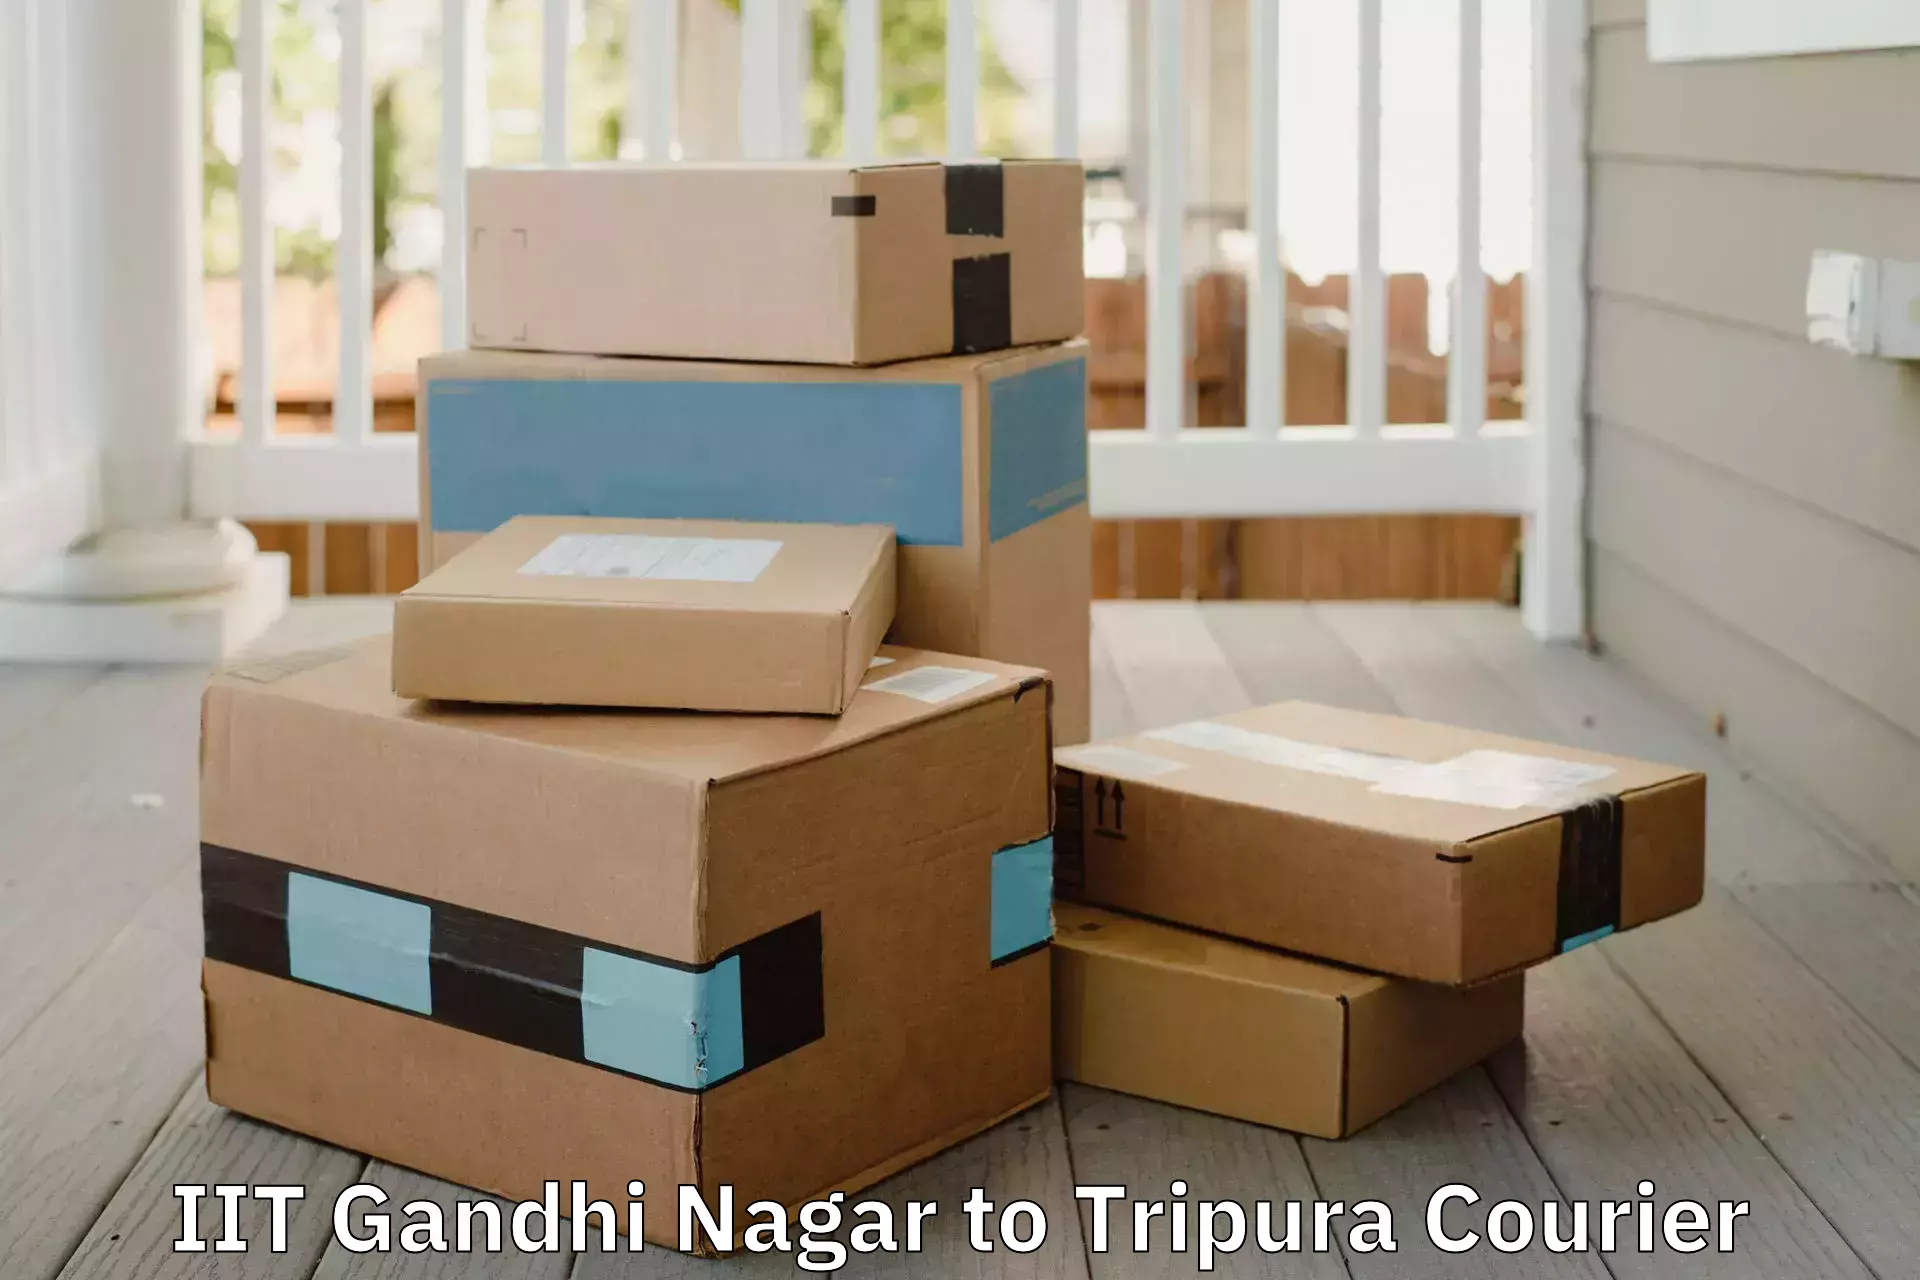 Quality moving company in IIT Gandhi Nagar to Aambasa